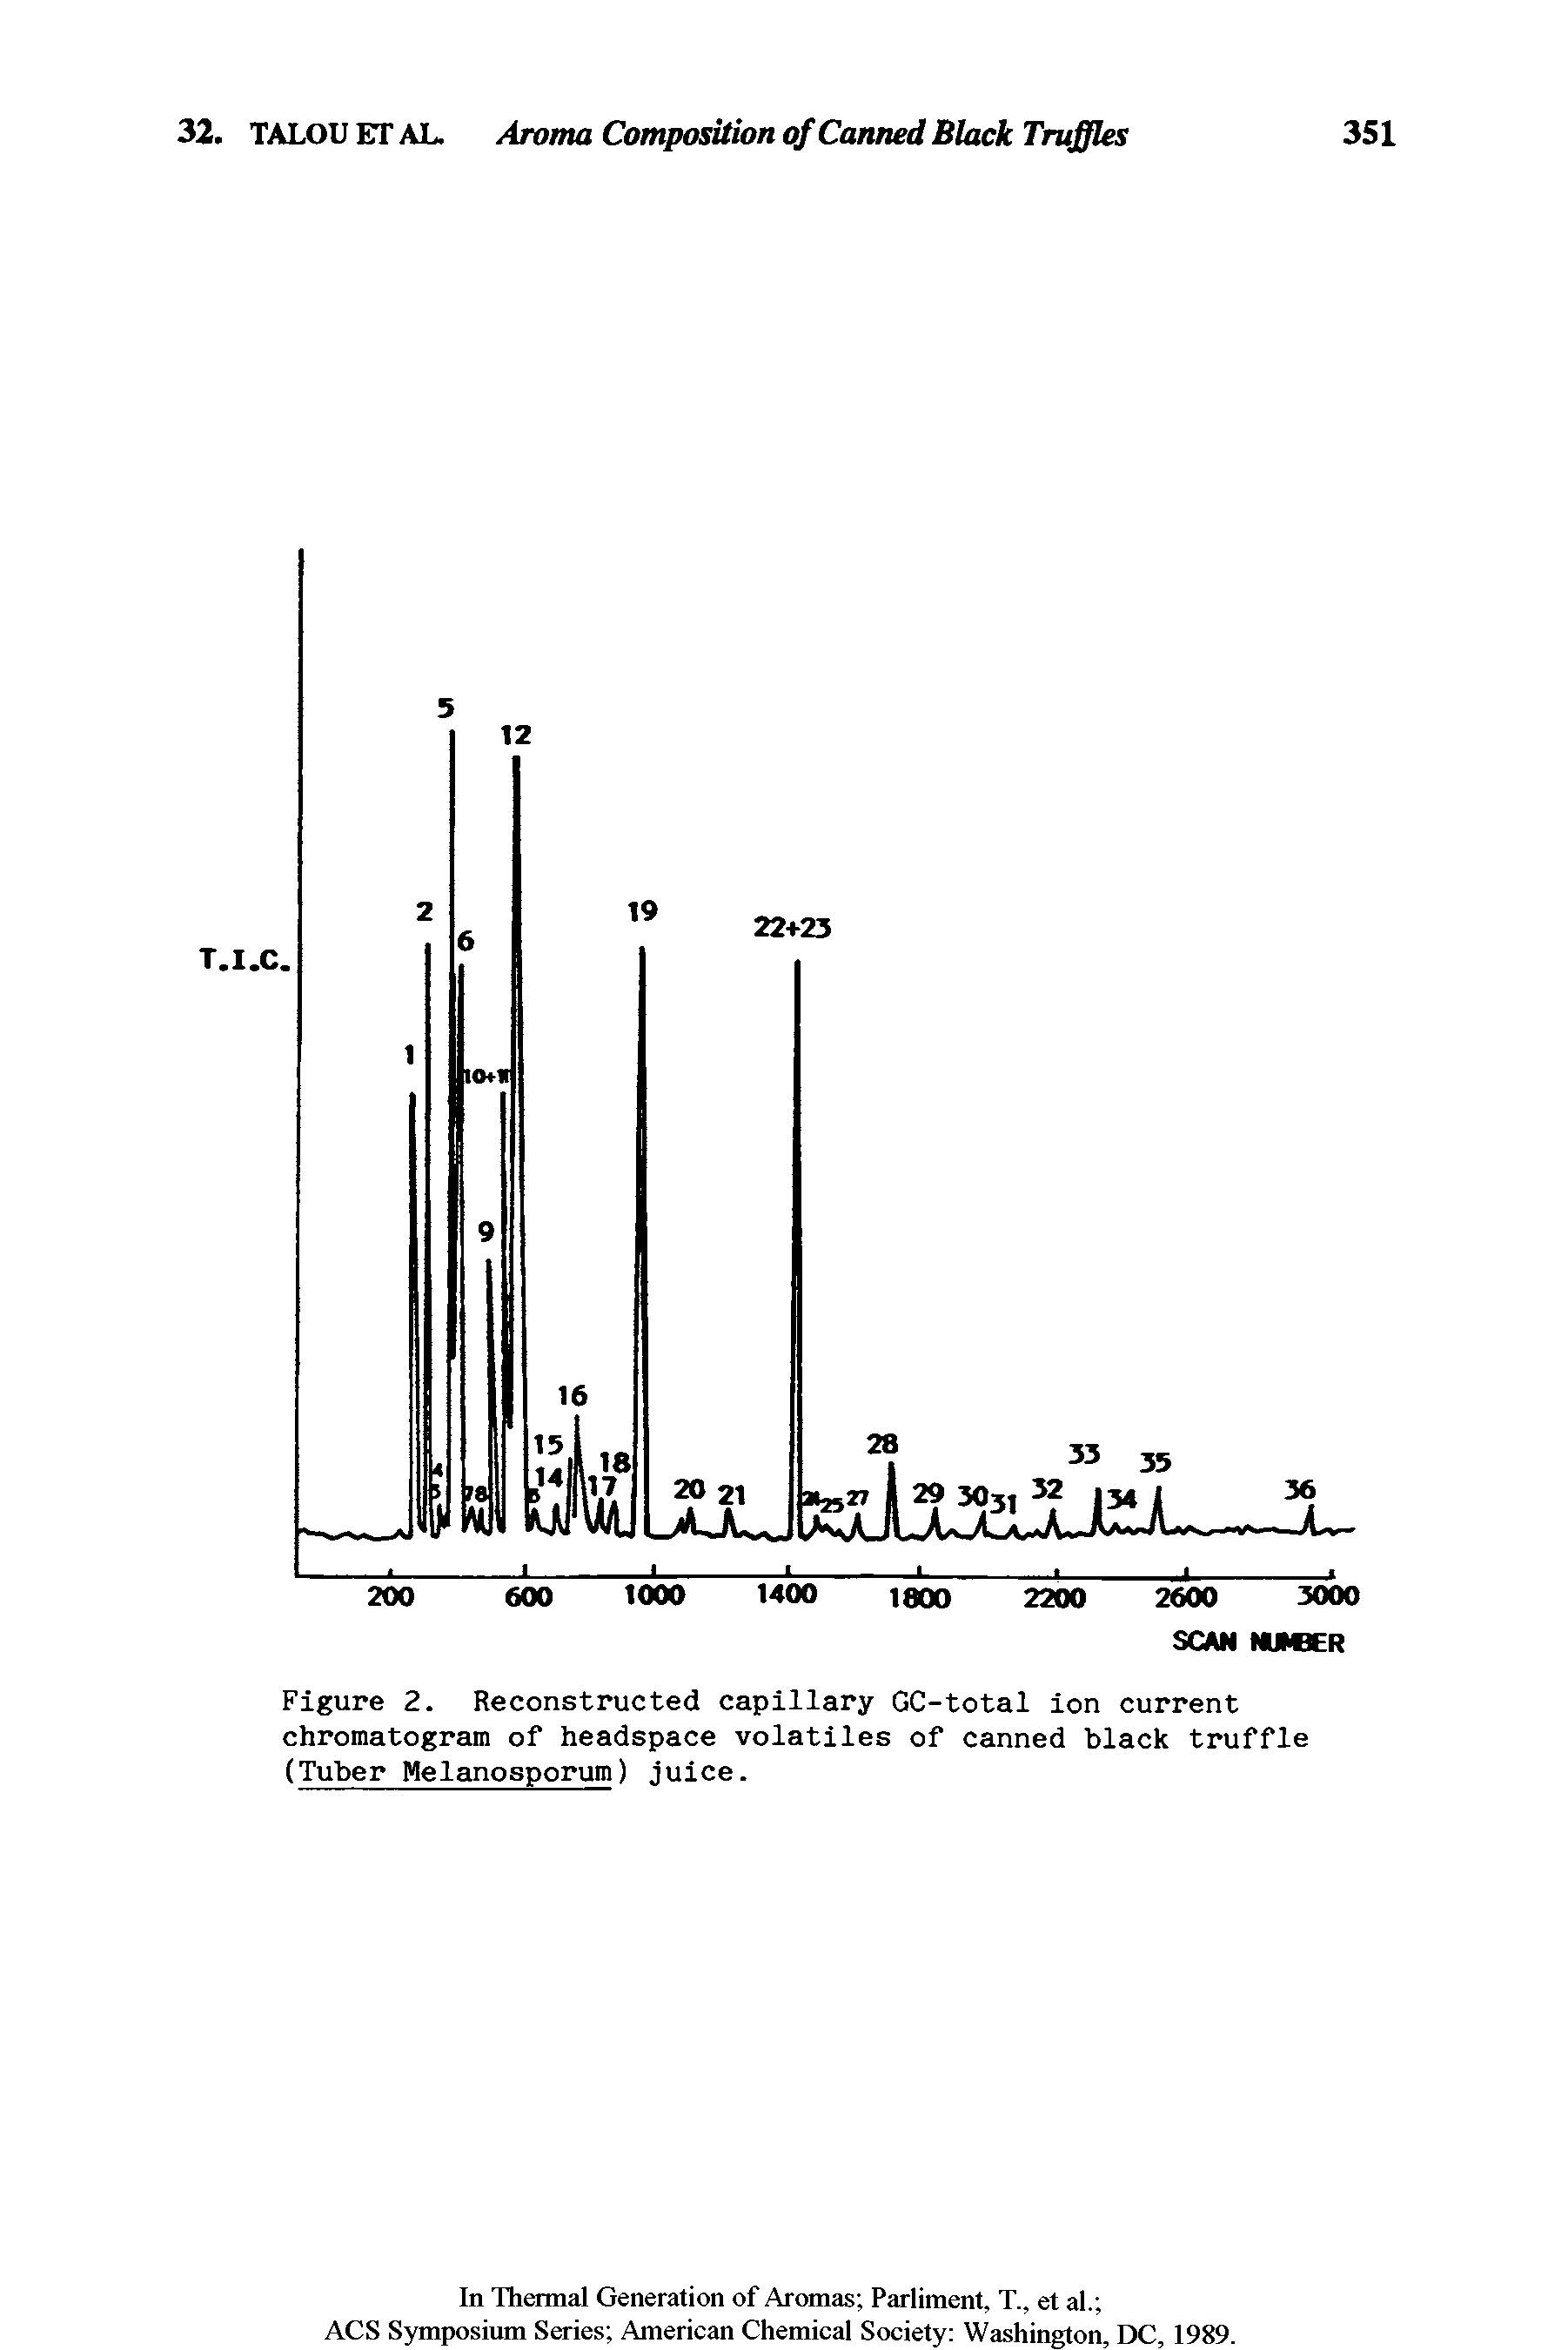 Figure 2. Reconstructed capillary GC-total ion current chromatogram of headspace volatiles of canned black truffle (Tuber Melanosporum) juice.